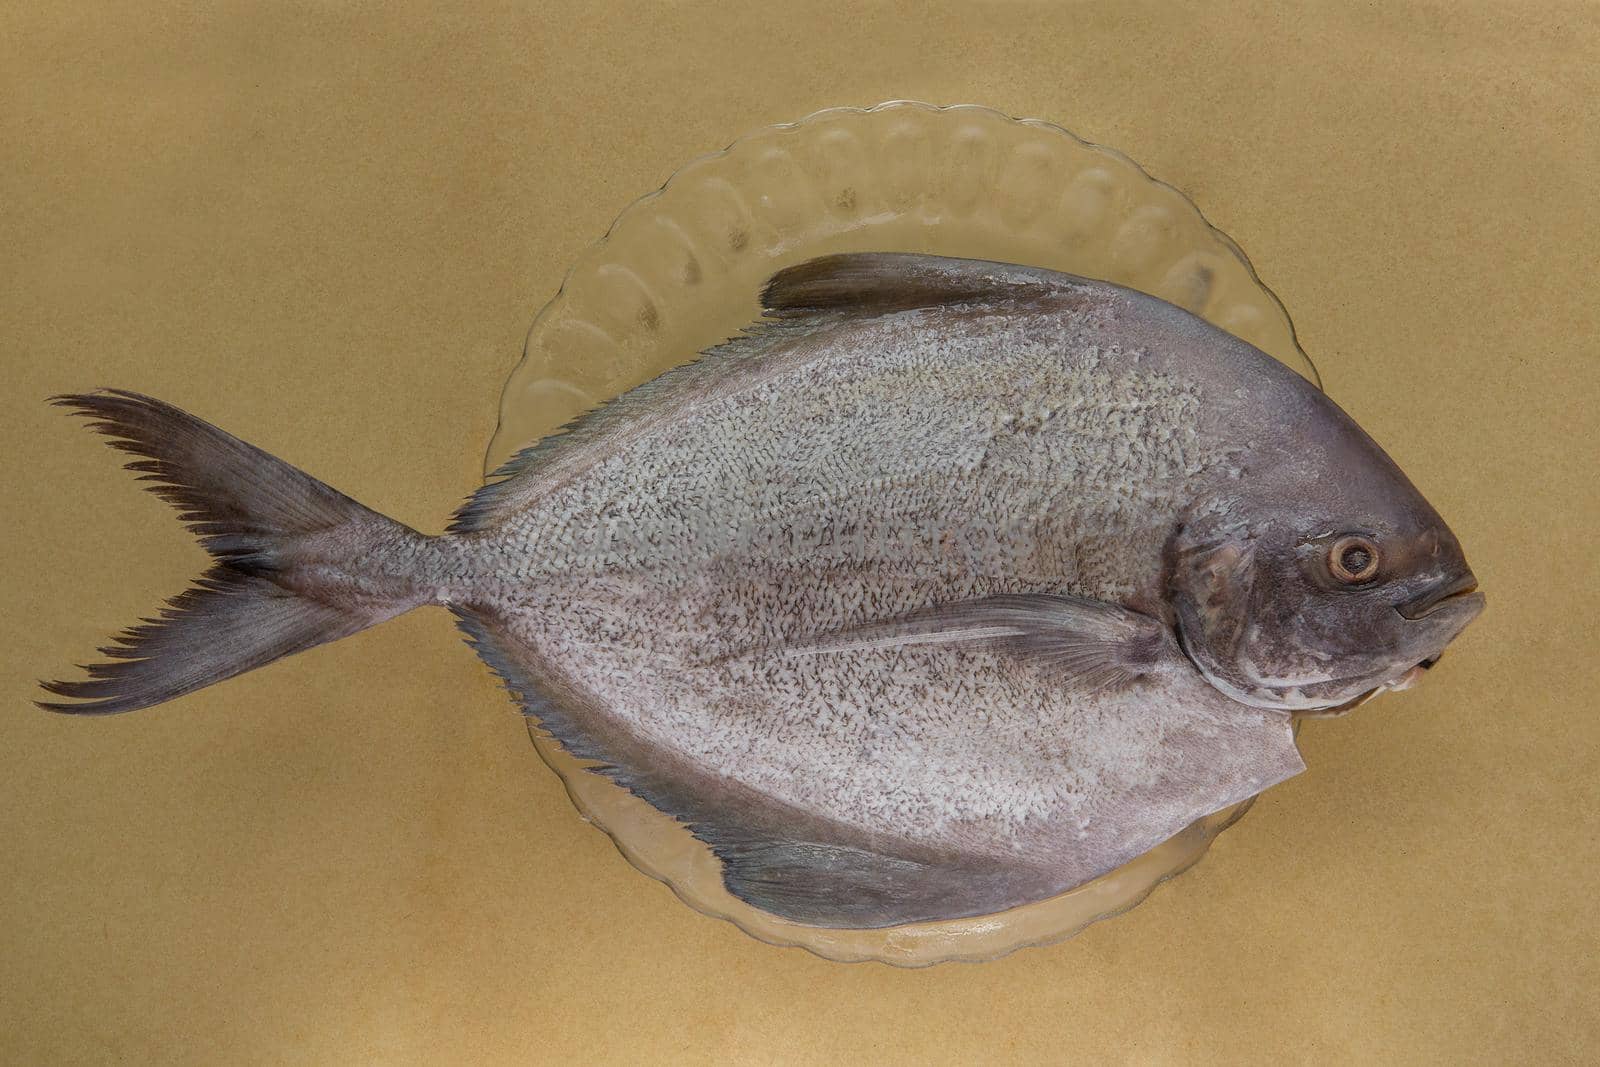 Black pomfret fish by titipong